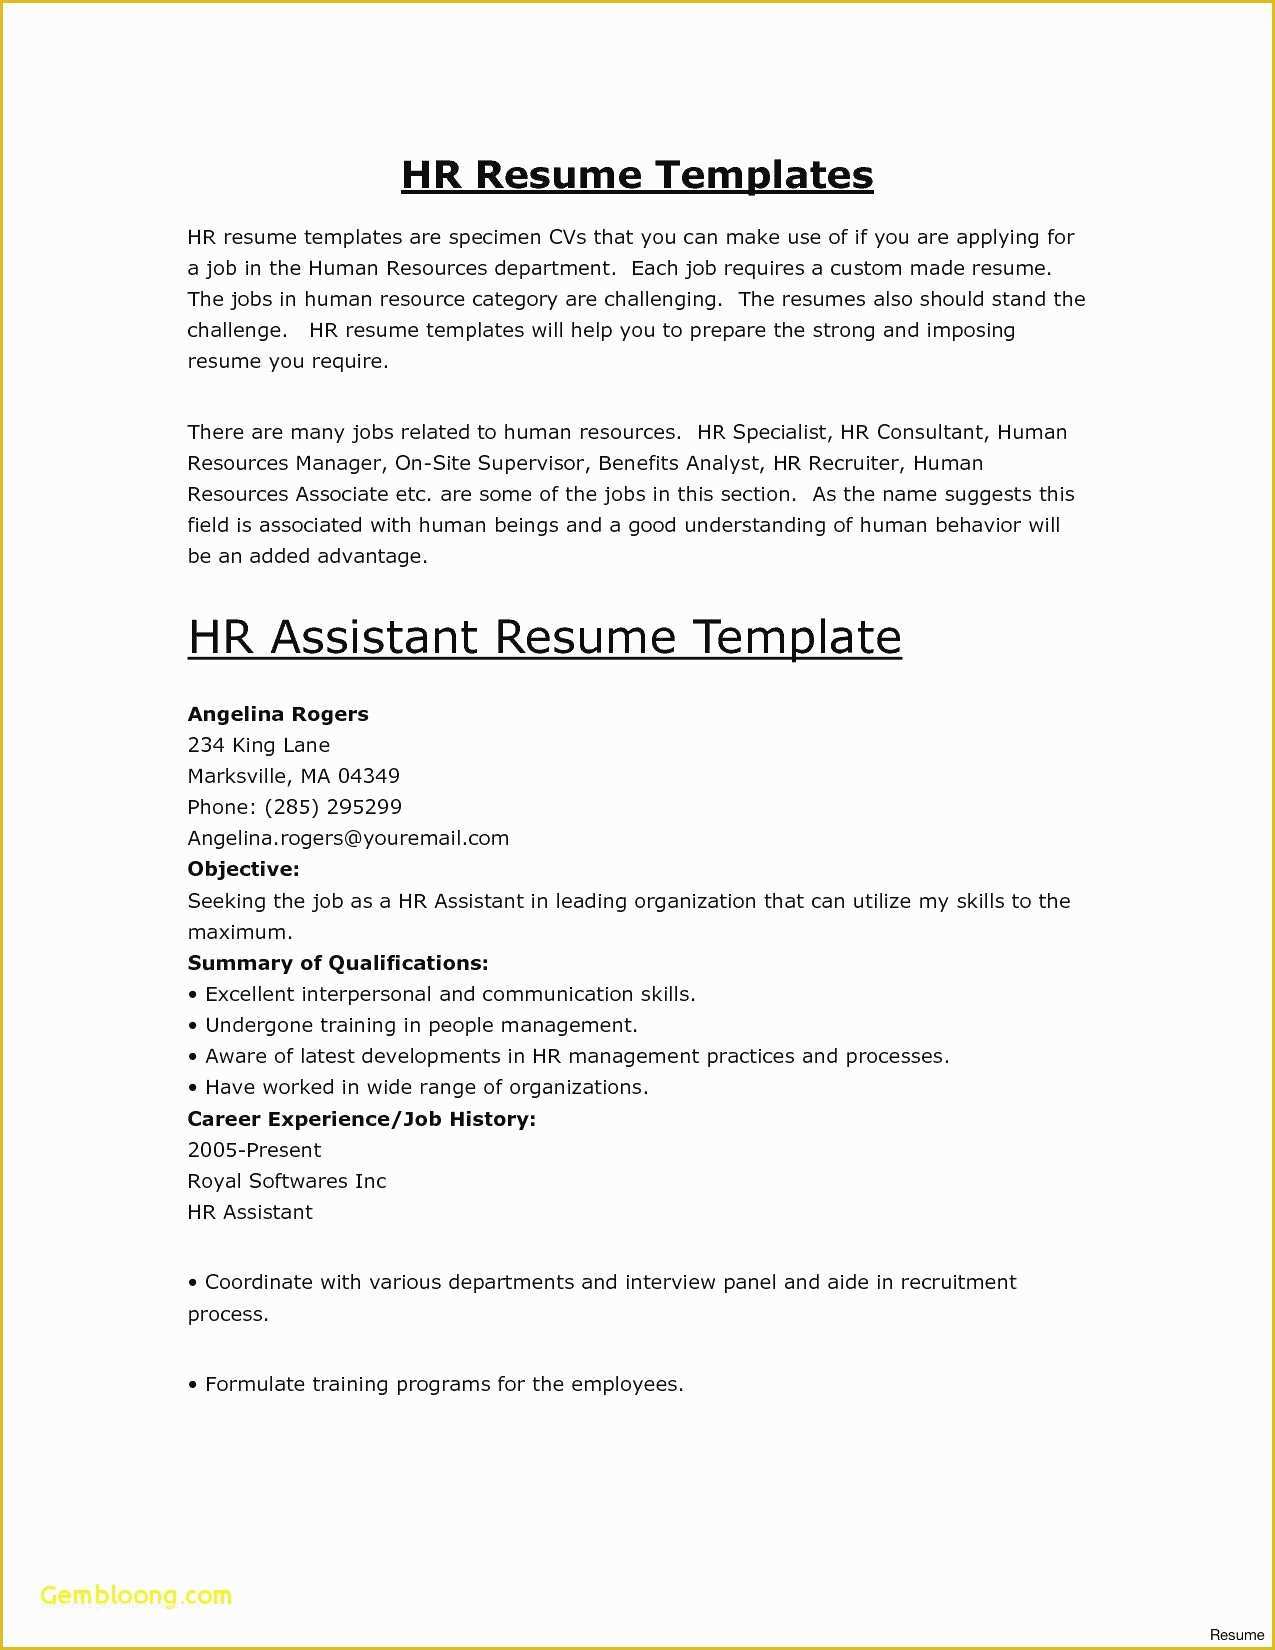 Free Resume Templates for Restaurant Servers Of Pleasant Restaurant Server Resume Sample Free with